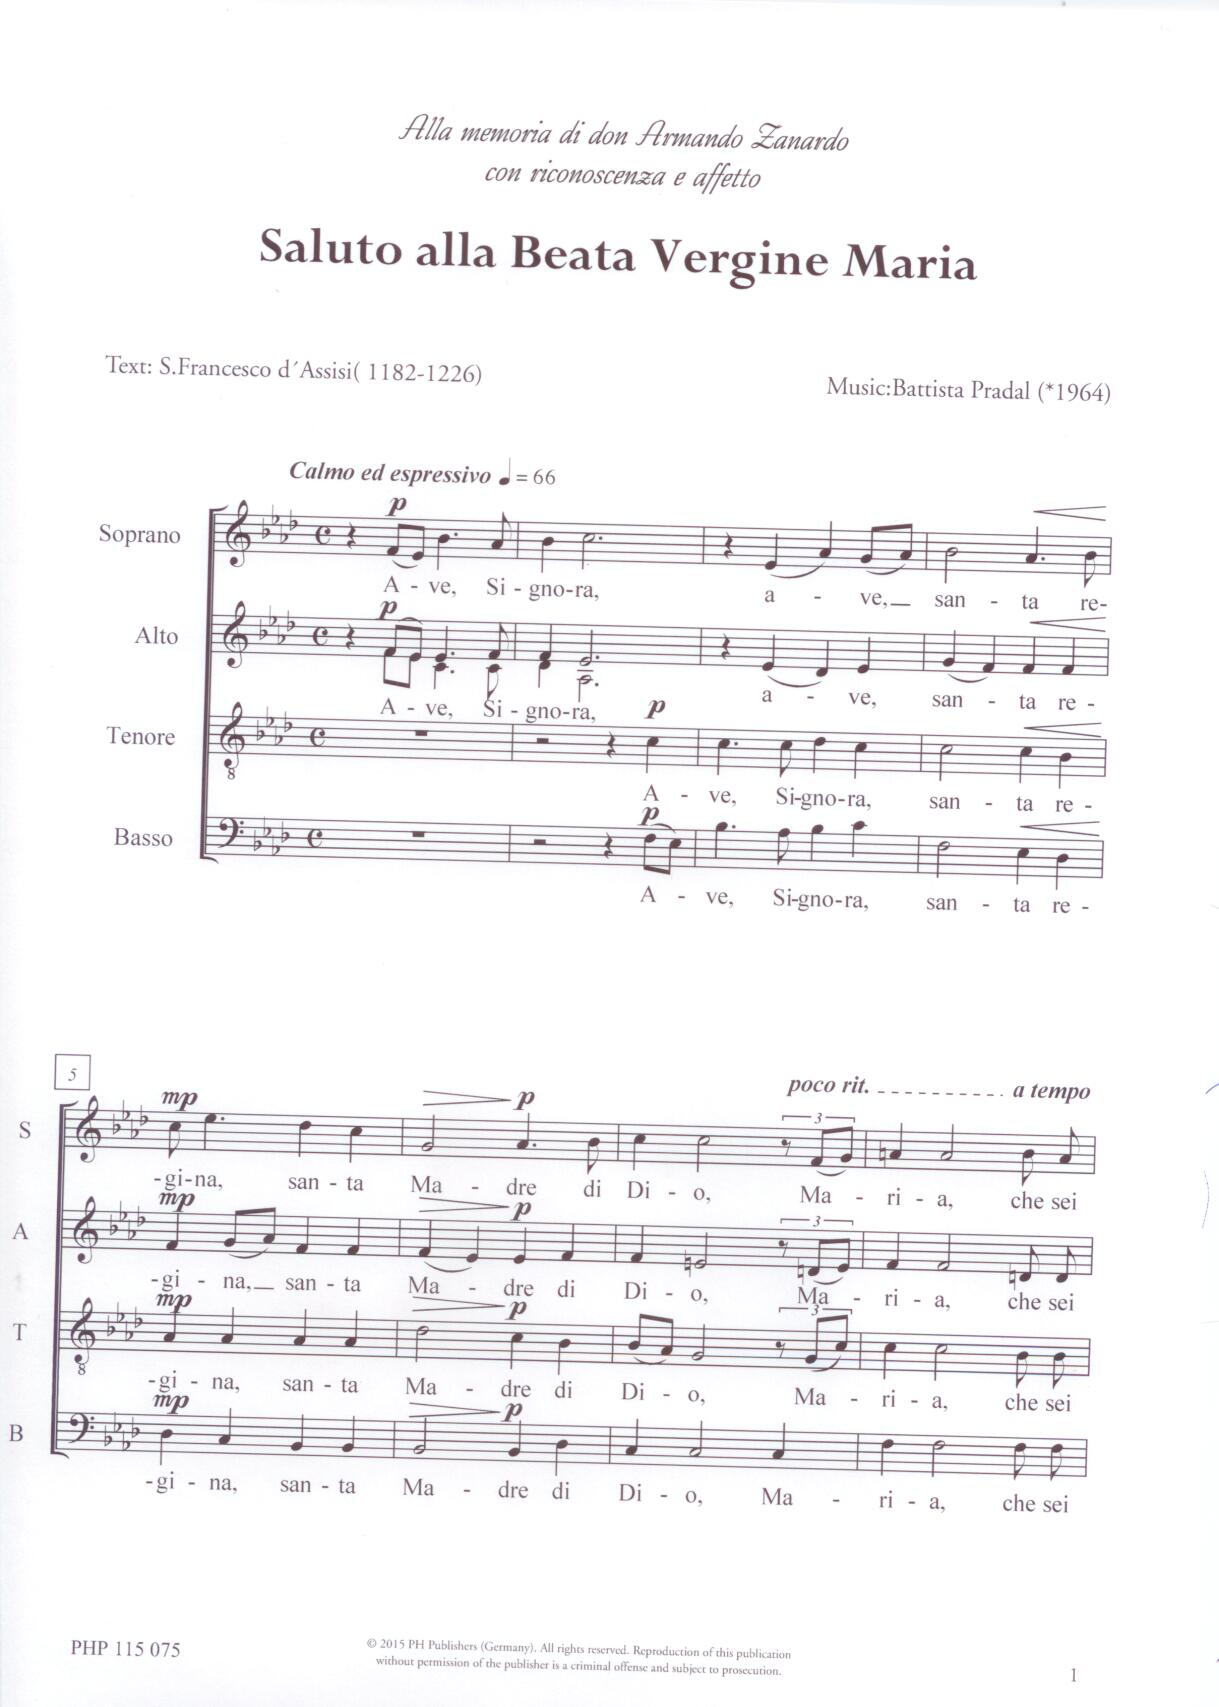 Saluto alla Beata Vergine Maria - Show sample score